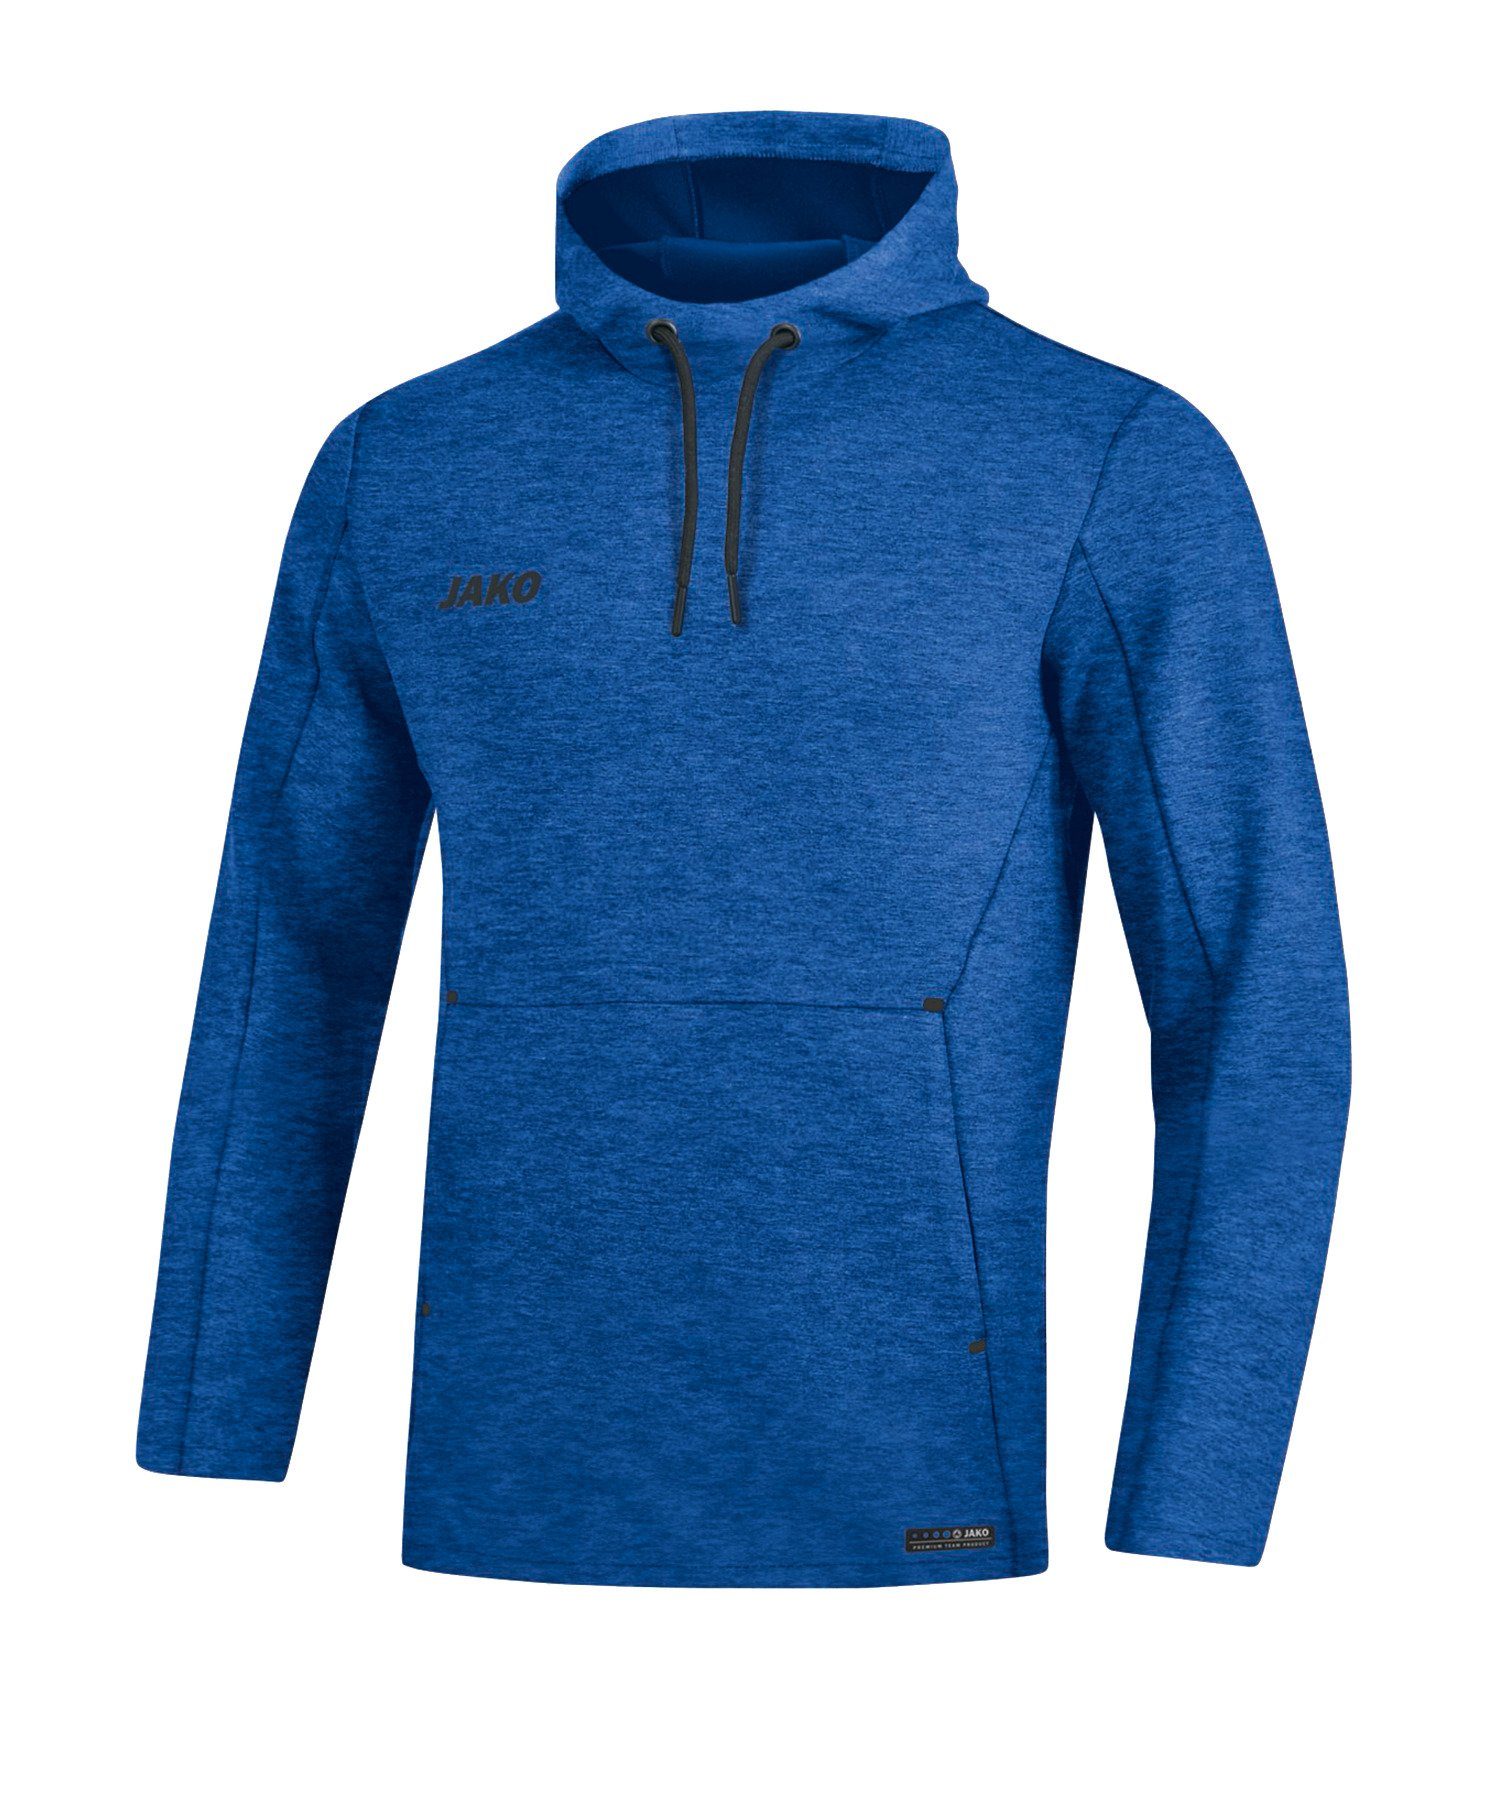 blauschwarz Kapuzensweatshirt Premium Jako Sweatshirt Basic